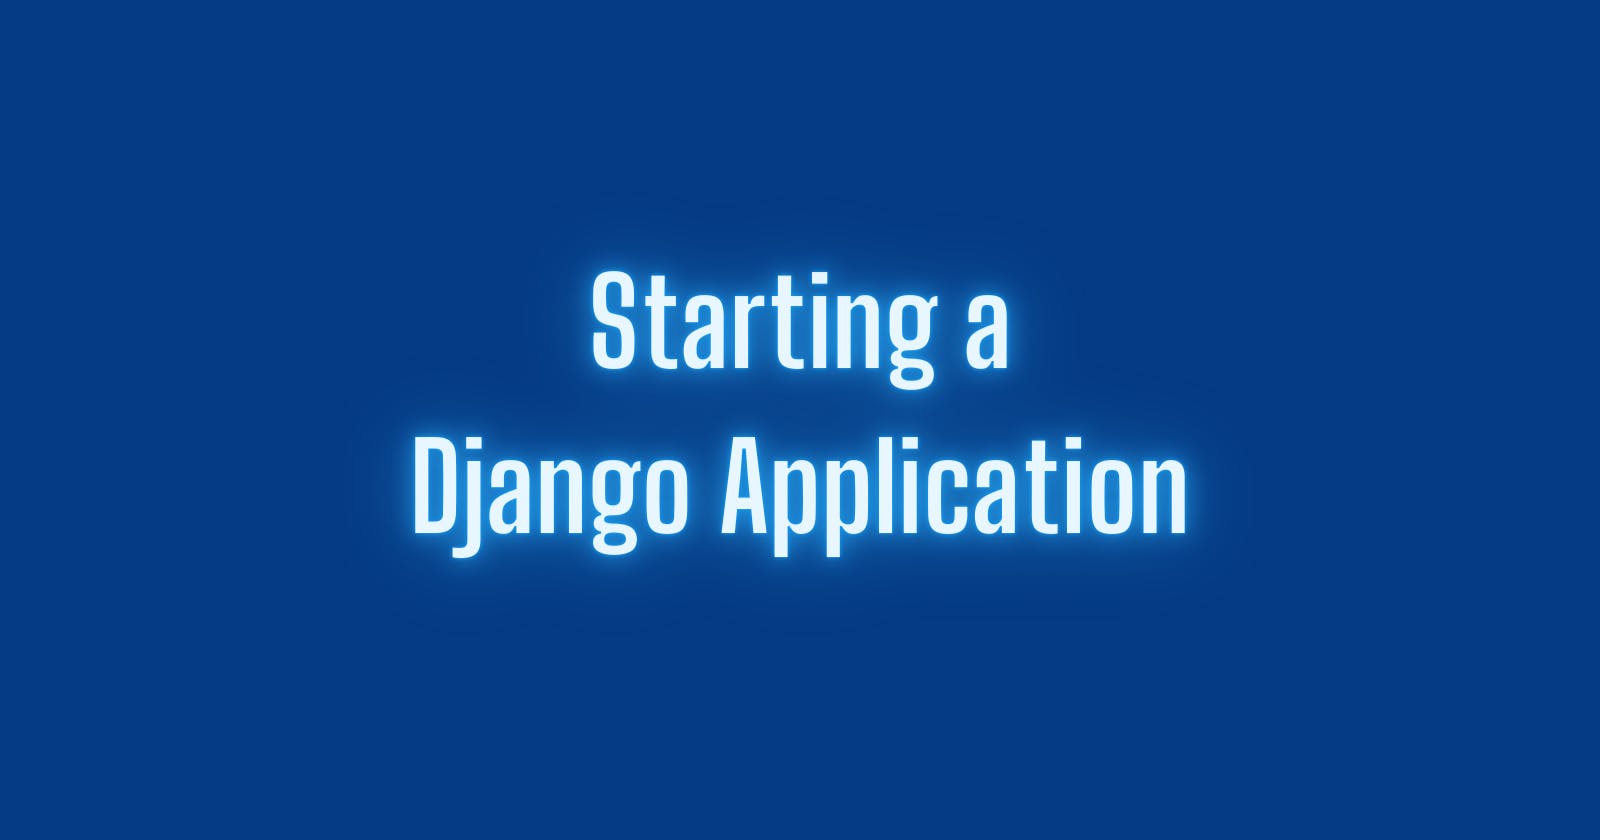 Starting a Django Application